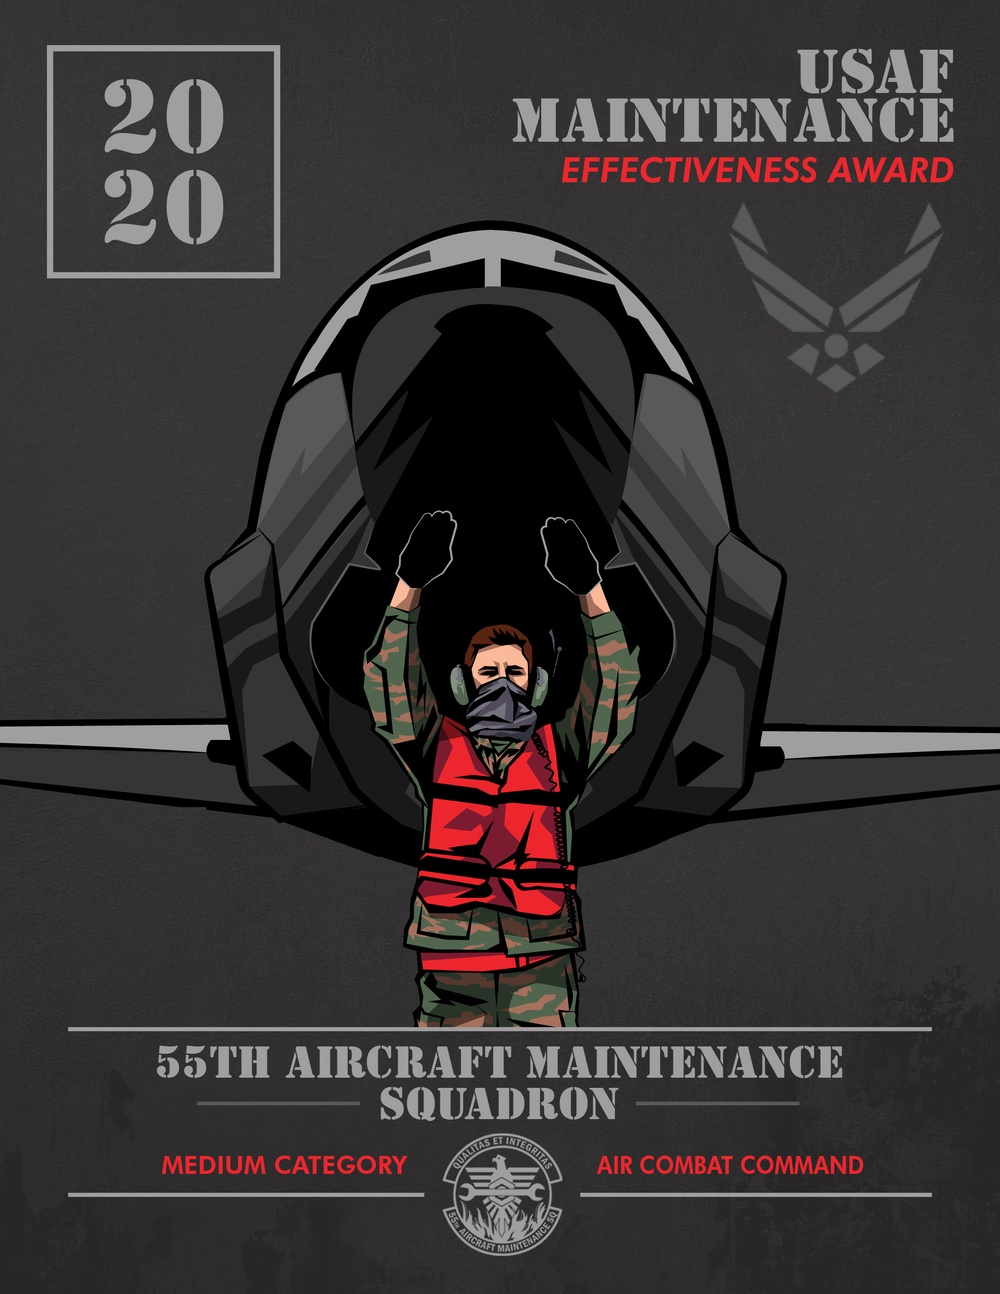 USAF Maintenance Award Package